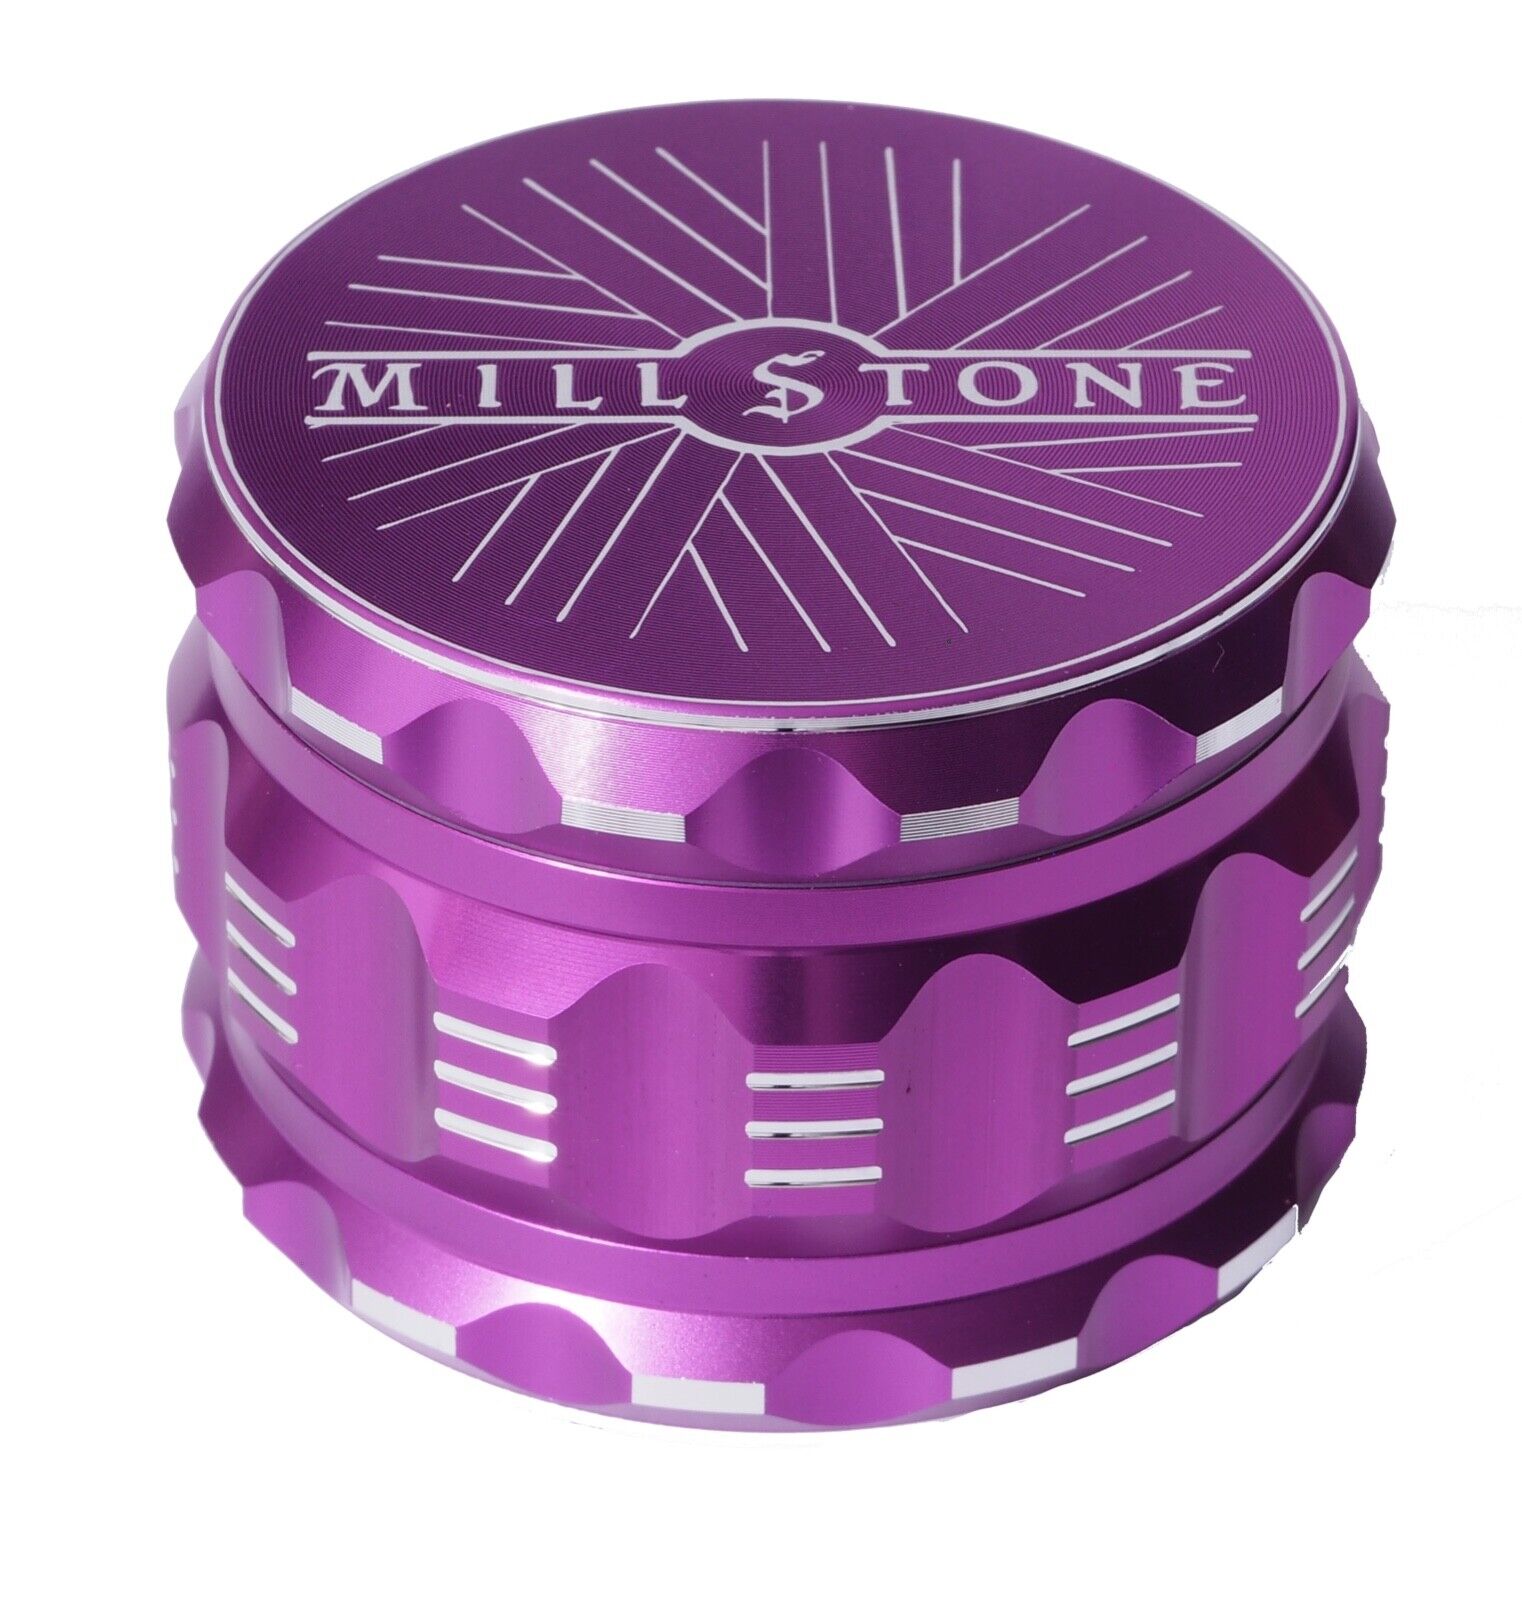 Millstone Herb Tobacco Grinder 4-Piece Metal 2.5 inch Large Magnetic Top Purple